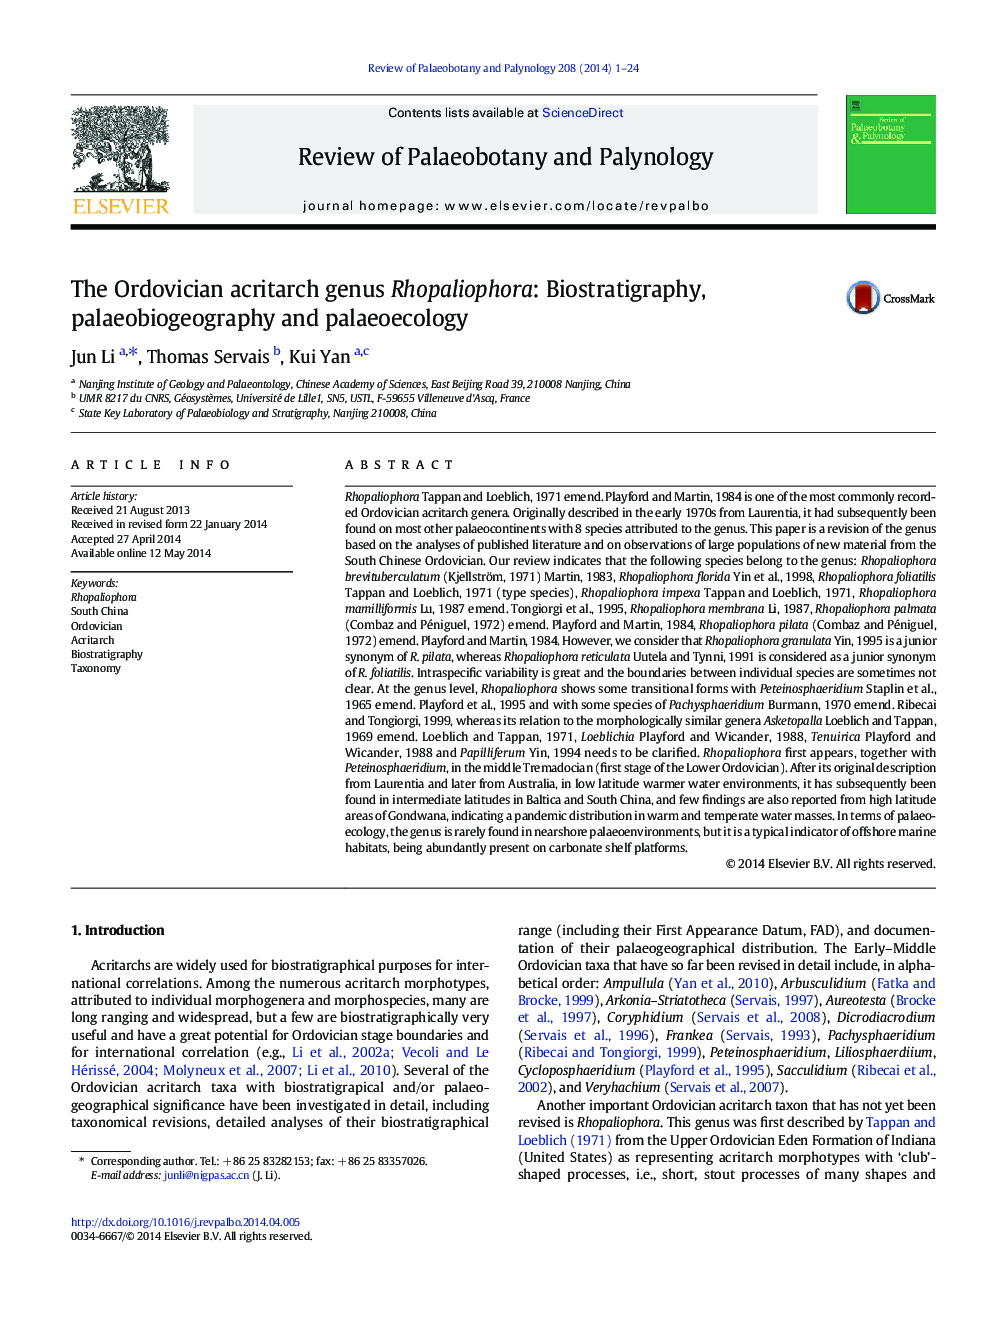 The Ordovician acritarch genus Rhopaliophora: Biostratigraphy, palaeobiogeography and palaeoecology